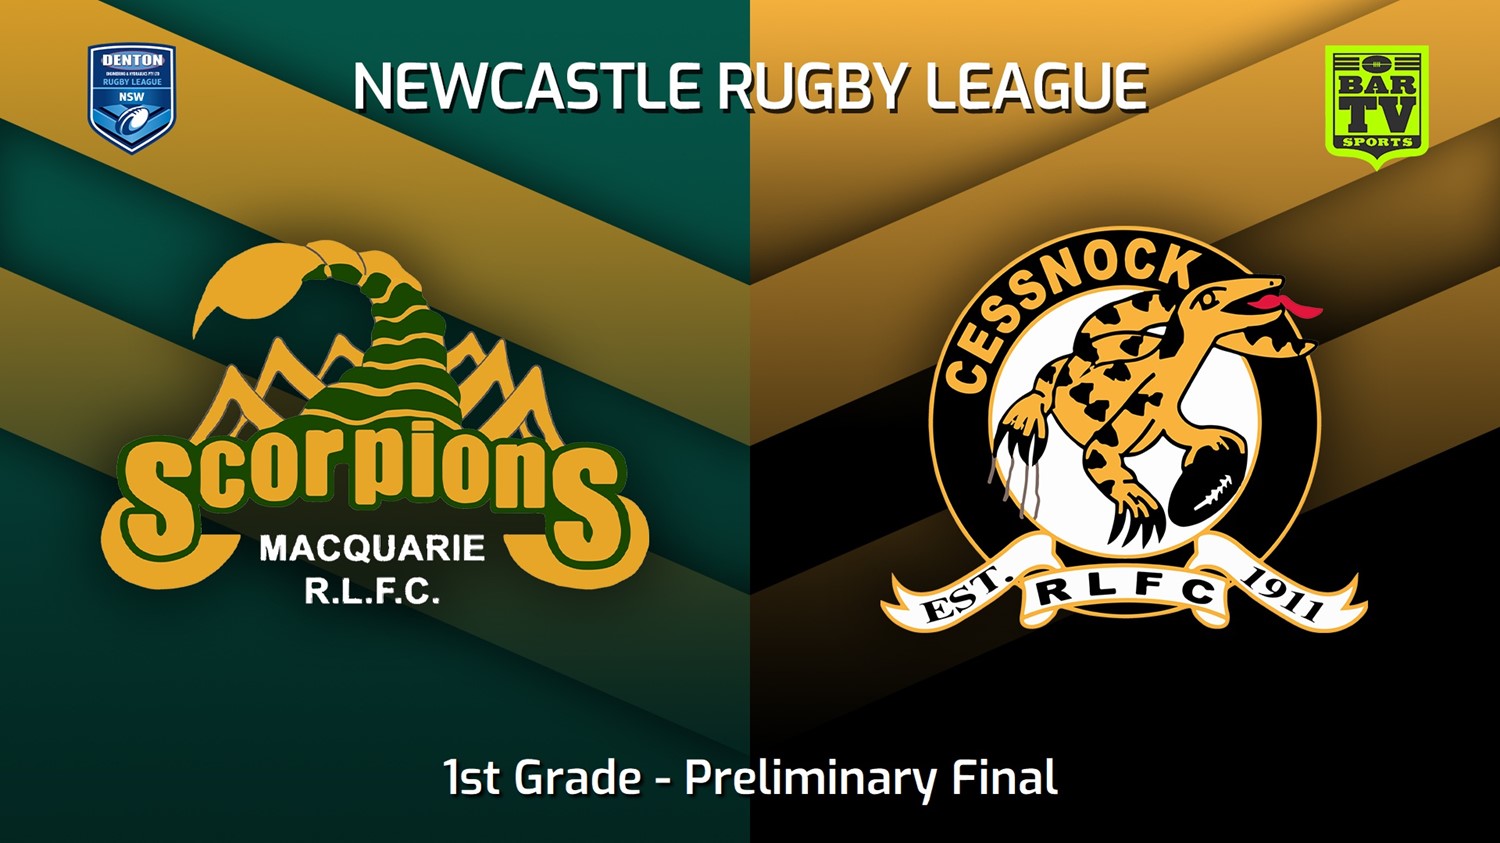 220903-Newcastle Preliminary Final - 1st Grade - Macquarie Scorpions v Cessnock Goannas Minigame Slate Image